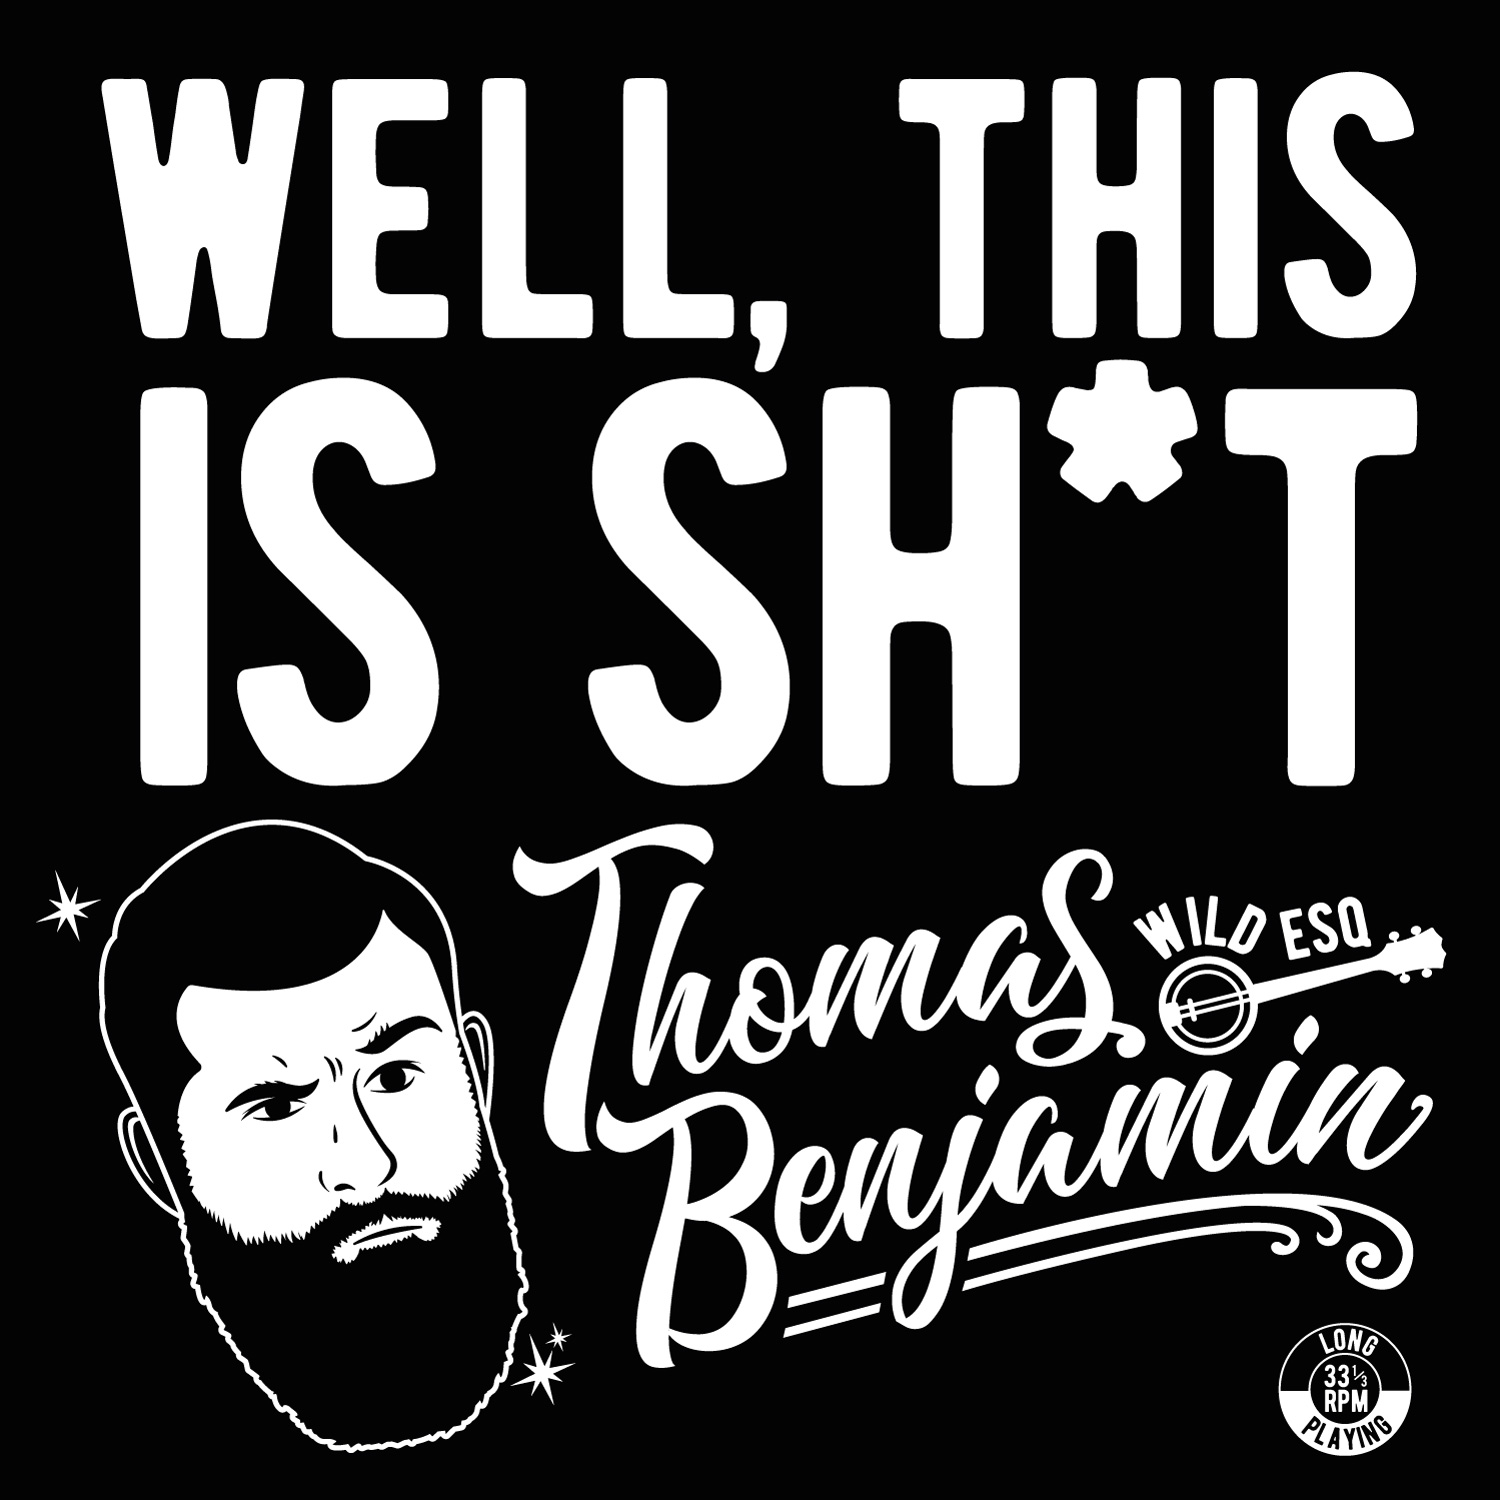 Thomas Benjamin Wild Esq Well, This is Shit